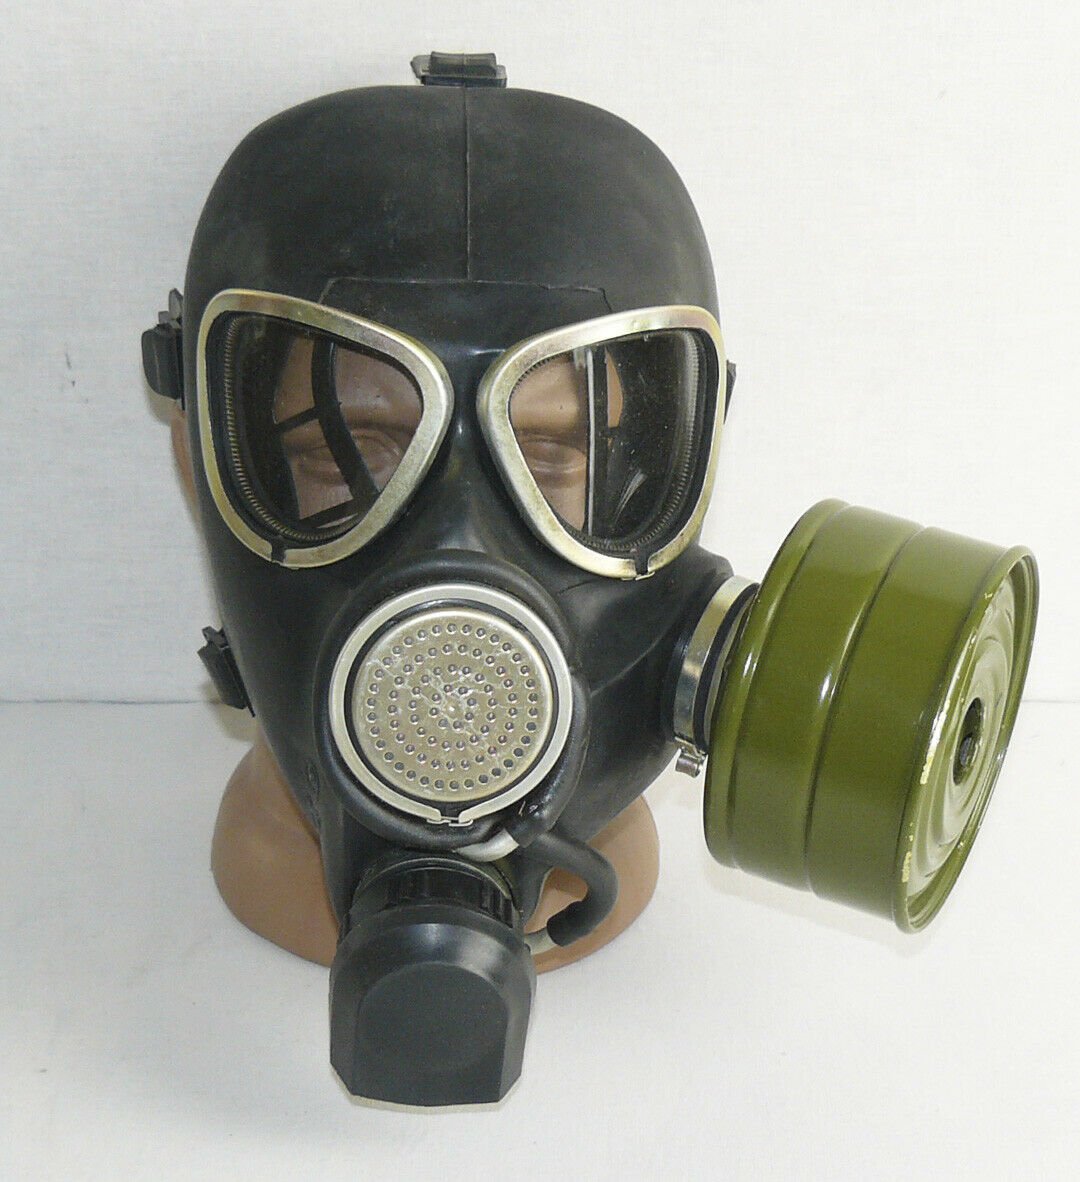 russian gas mask